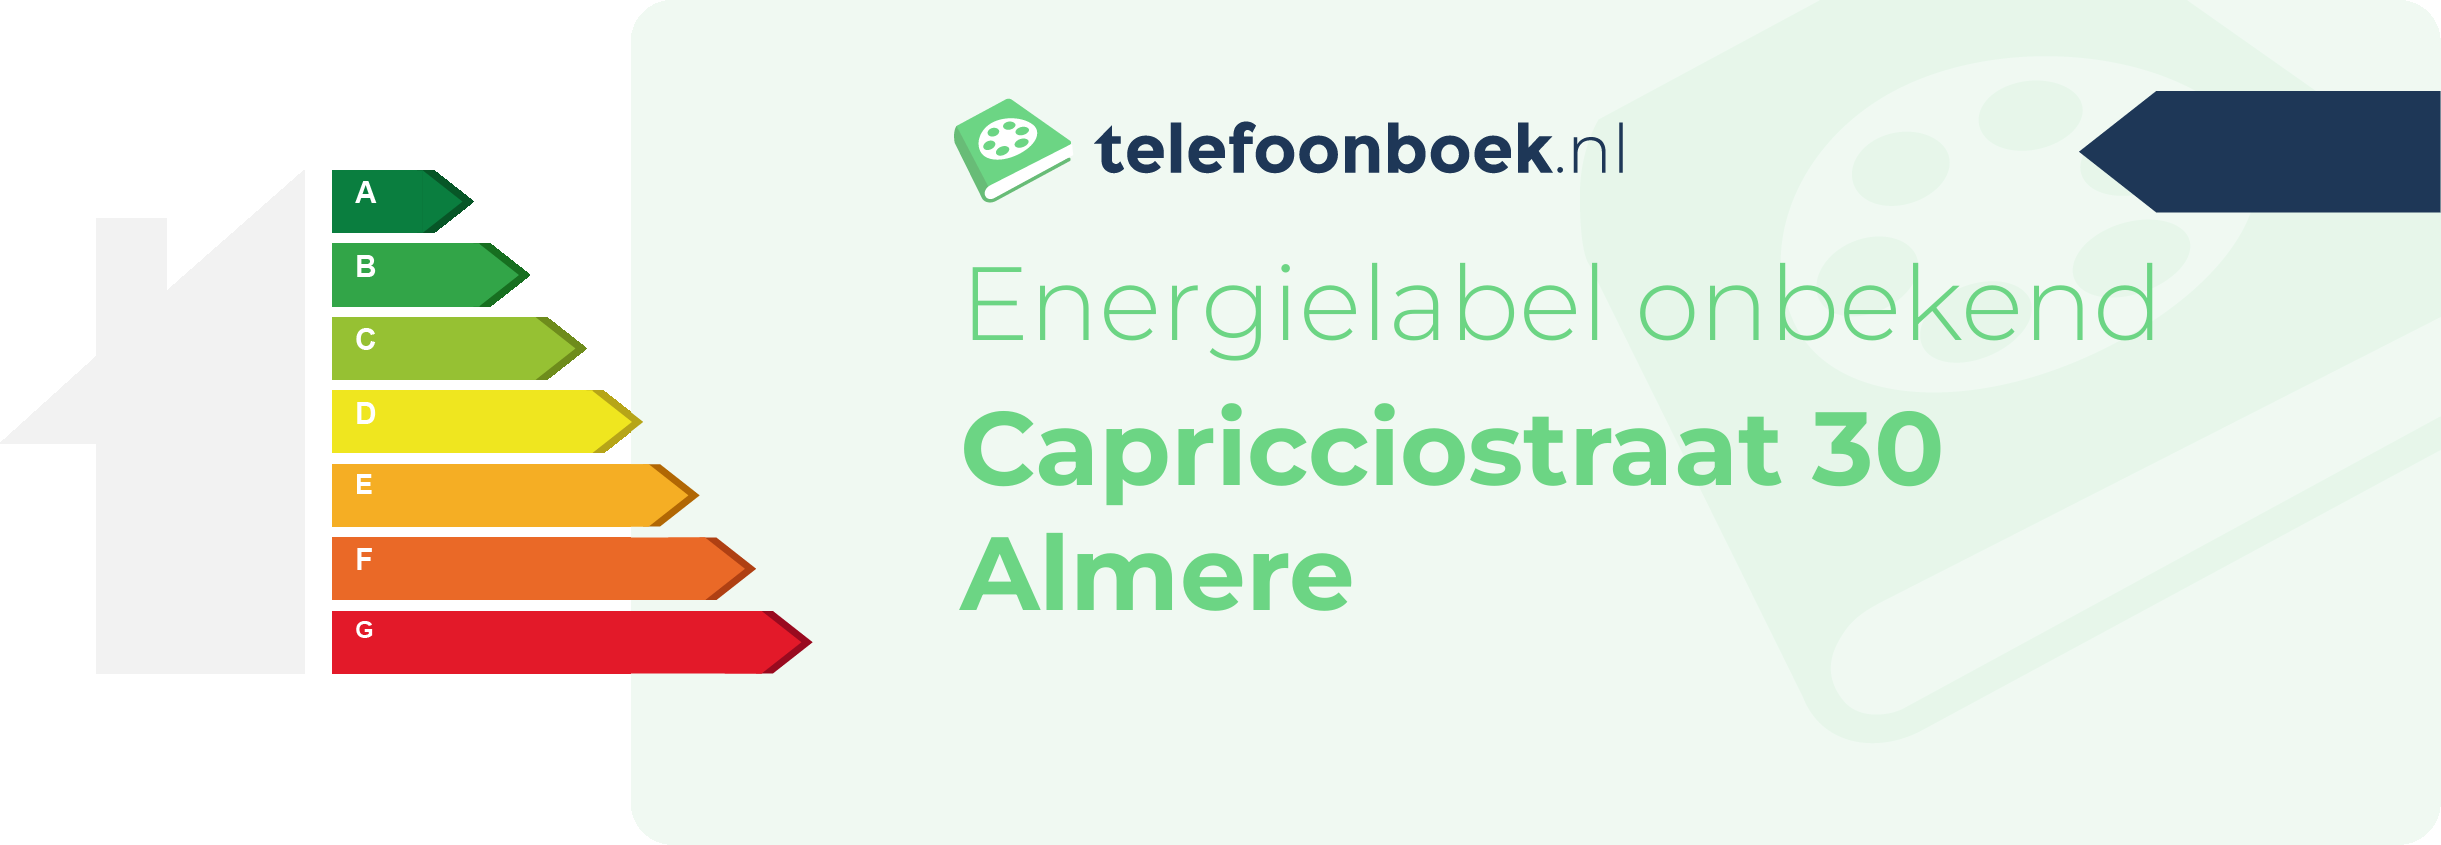 Energielabel Capricciostraat 30 Almere